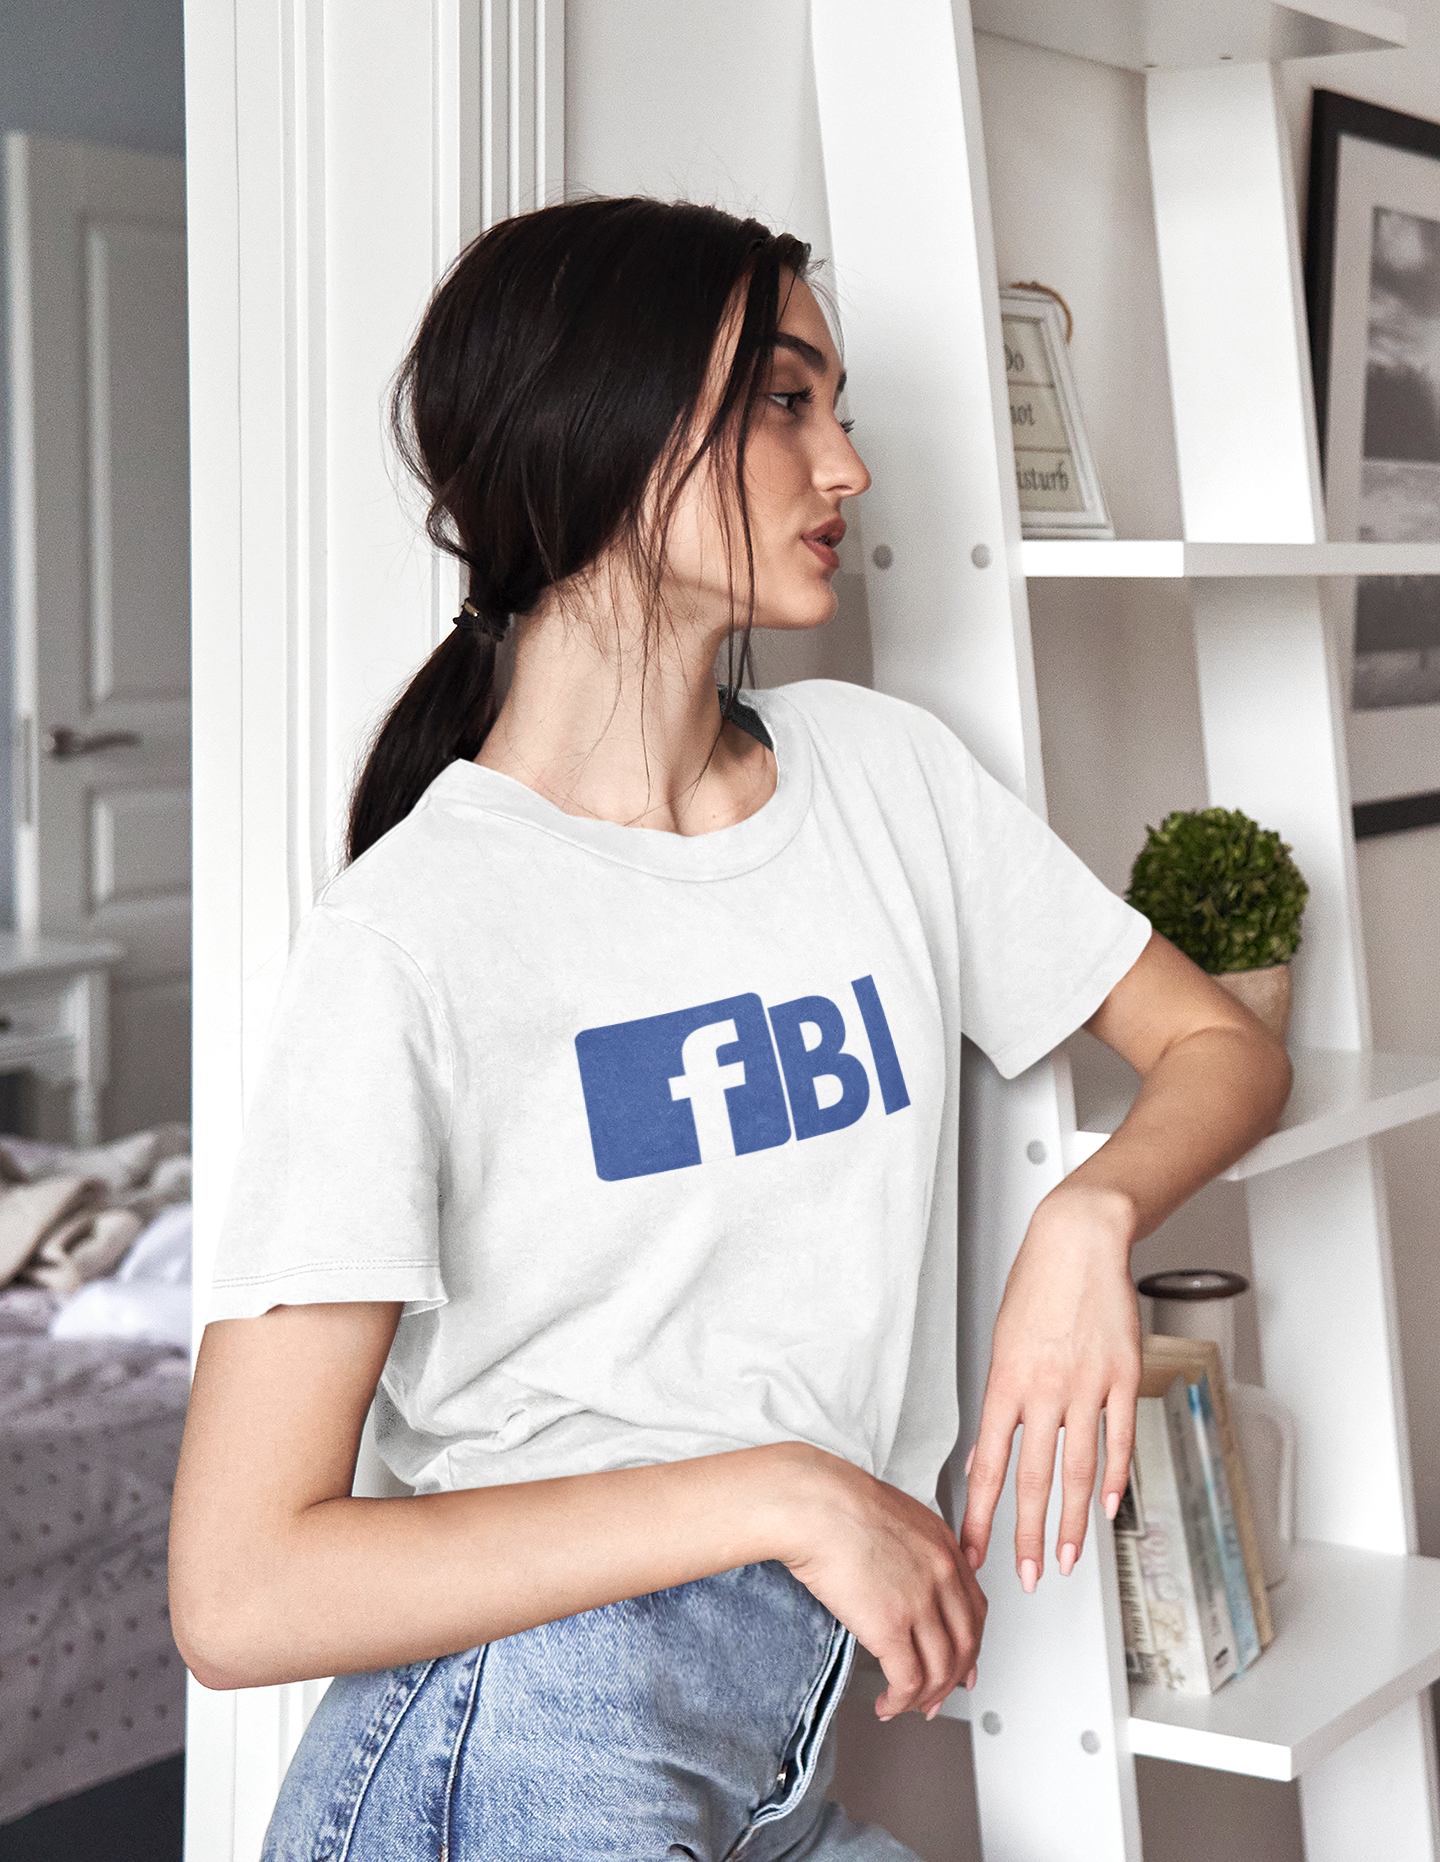 FB/FBI T-Shirt Wpmen - Statements Clothing